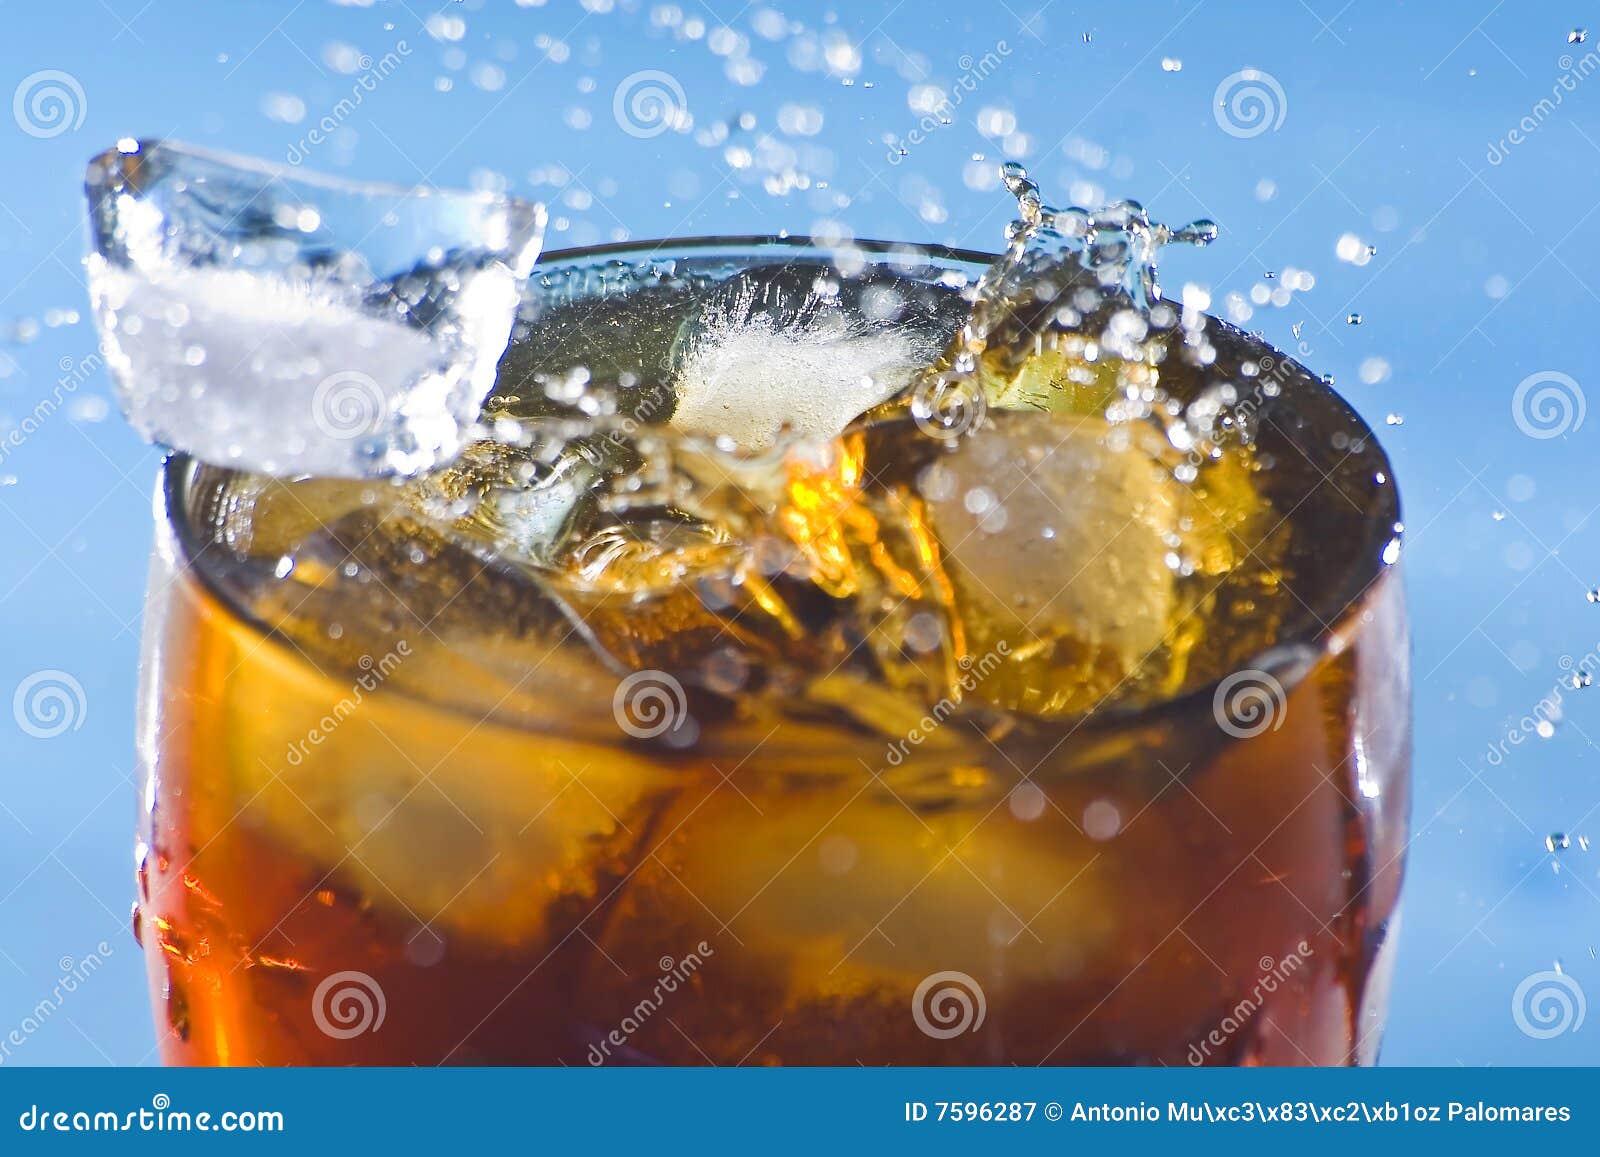 splash refreshment soda cold drink